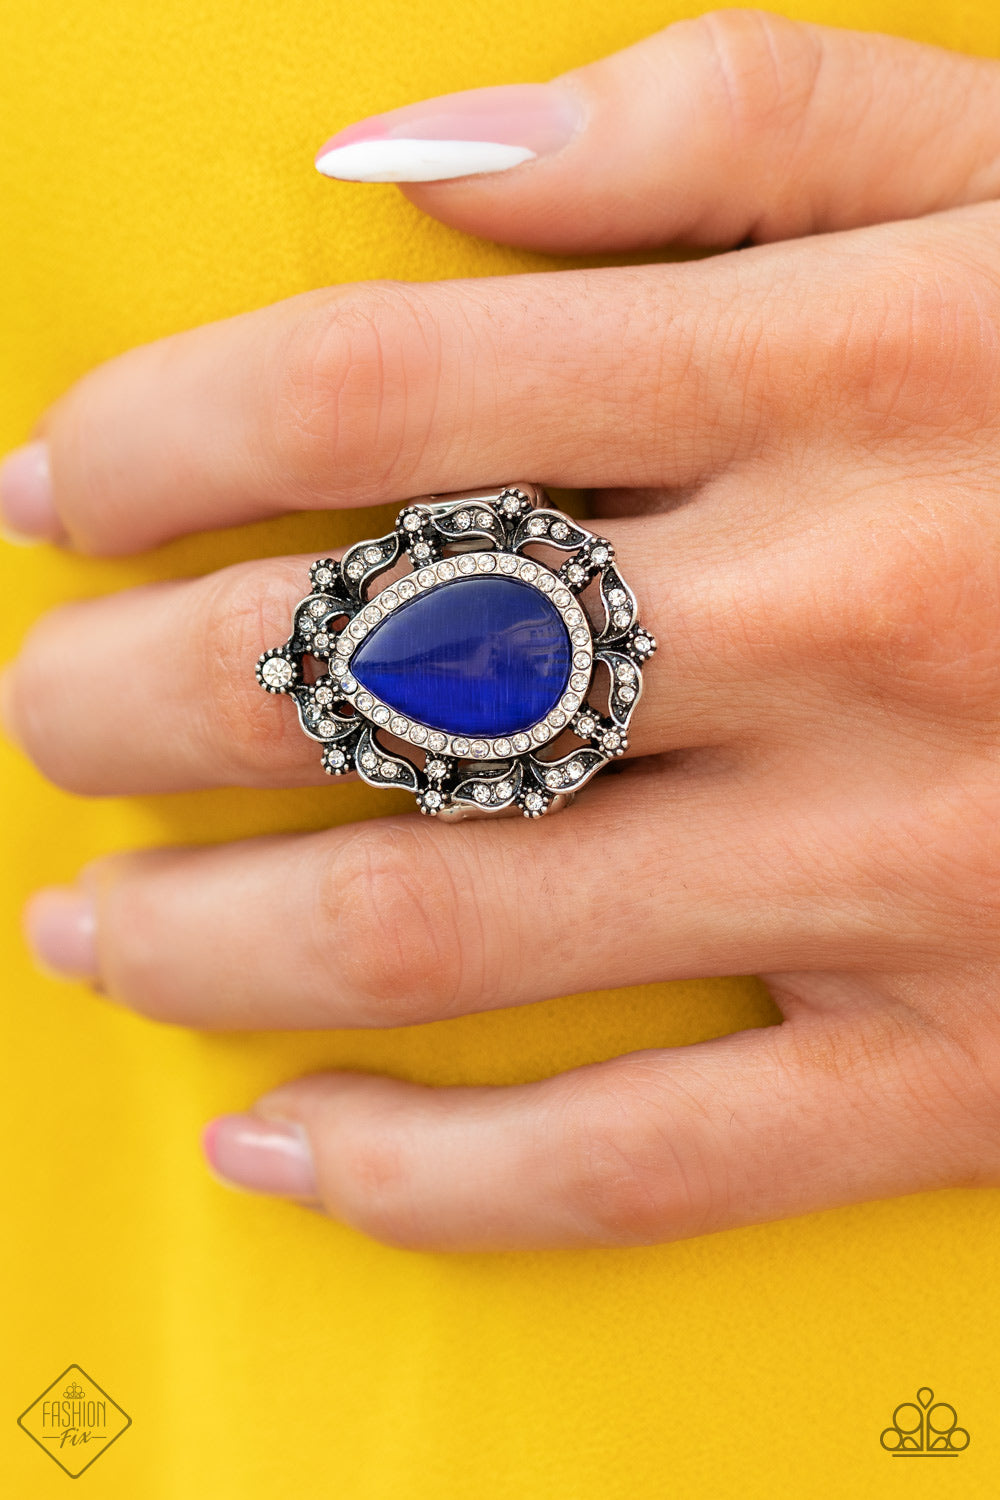 Paparazzi Iridescently Icy Blue Ring Fashion Fix Glimpses of Malibu Trend Blend - November 2020